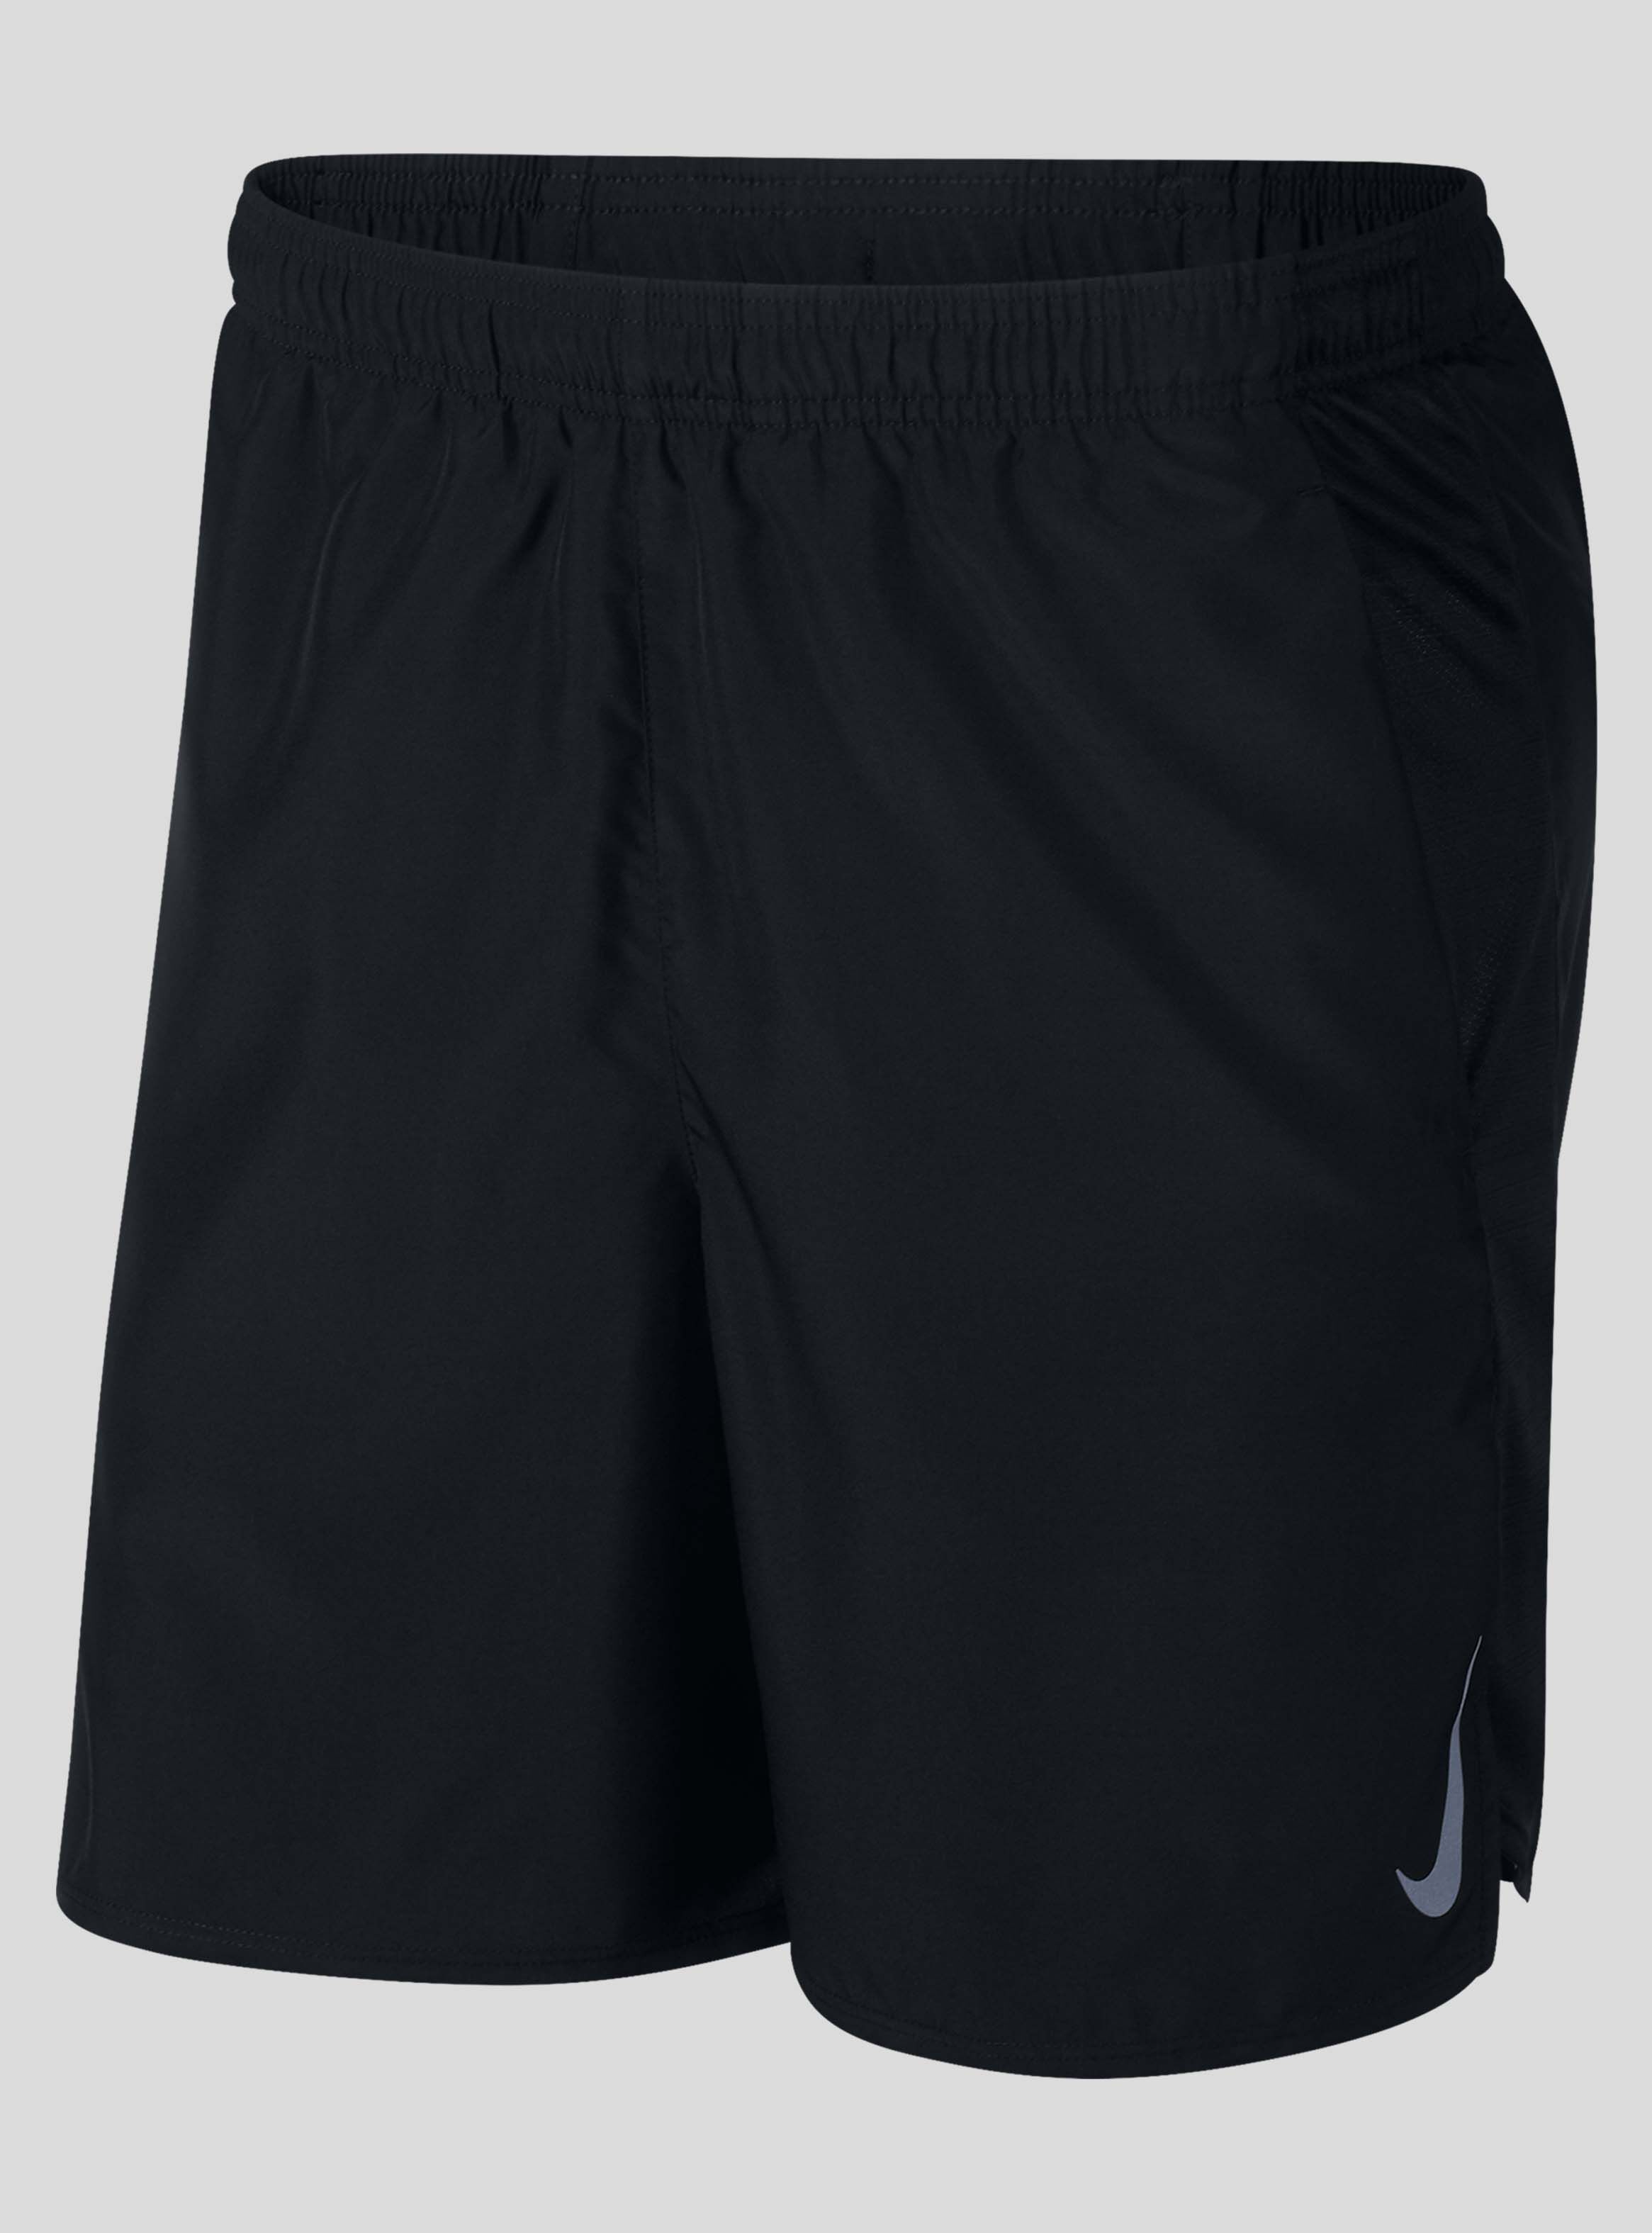 Short Deportivo Nike - Shorts | Paris.cl